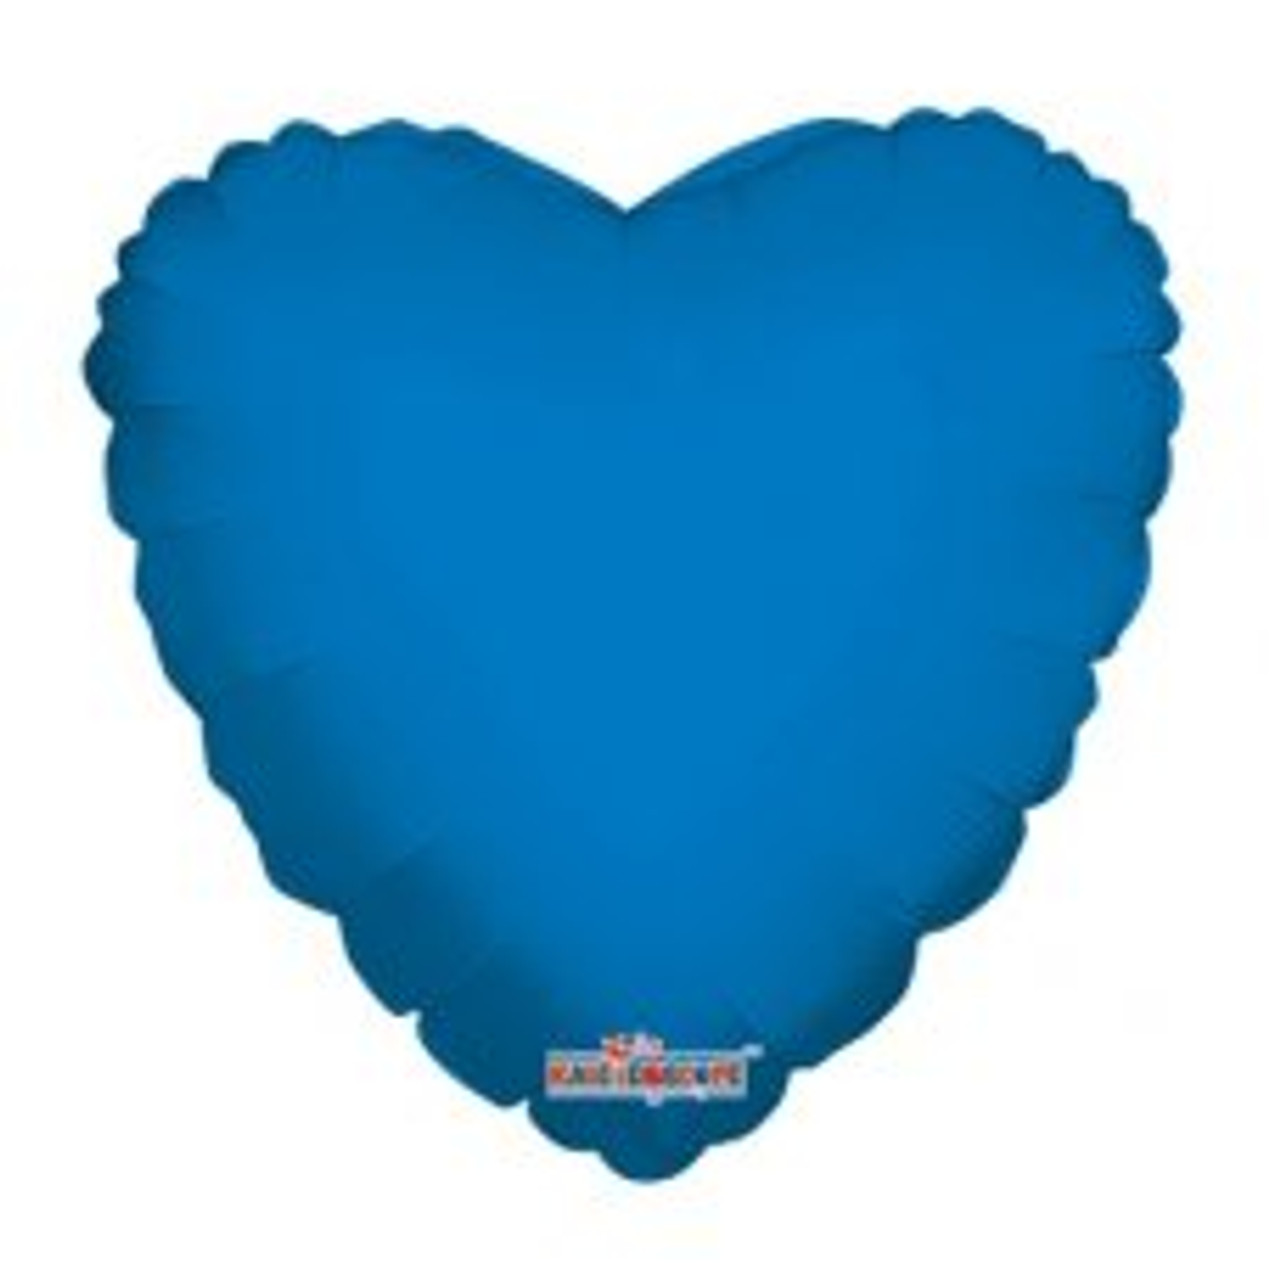 209219 ROYAL BLUE HEART 45CM/18 INCH FOIL BALLOON. INC HELIUM & RIBBON